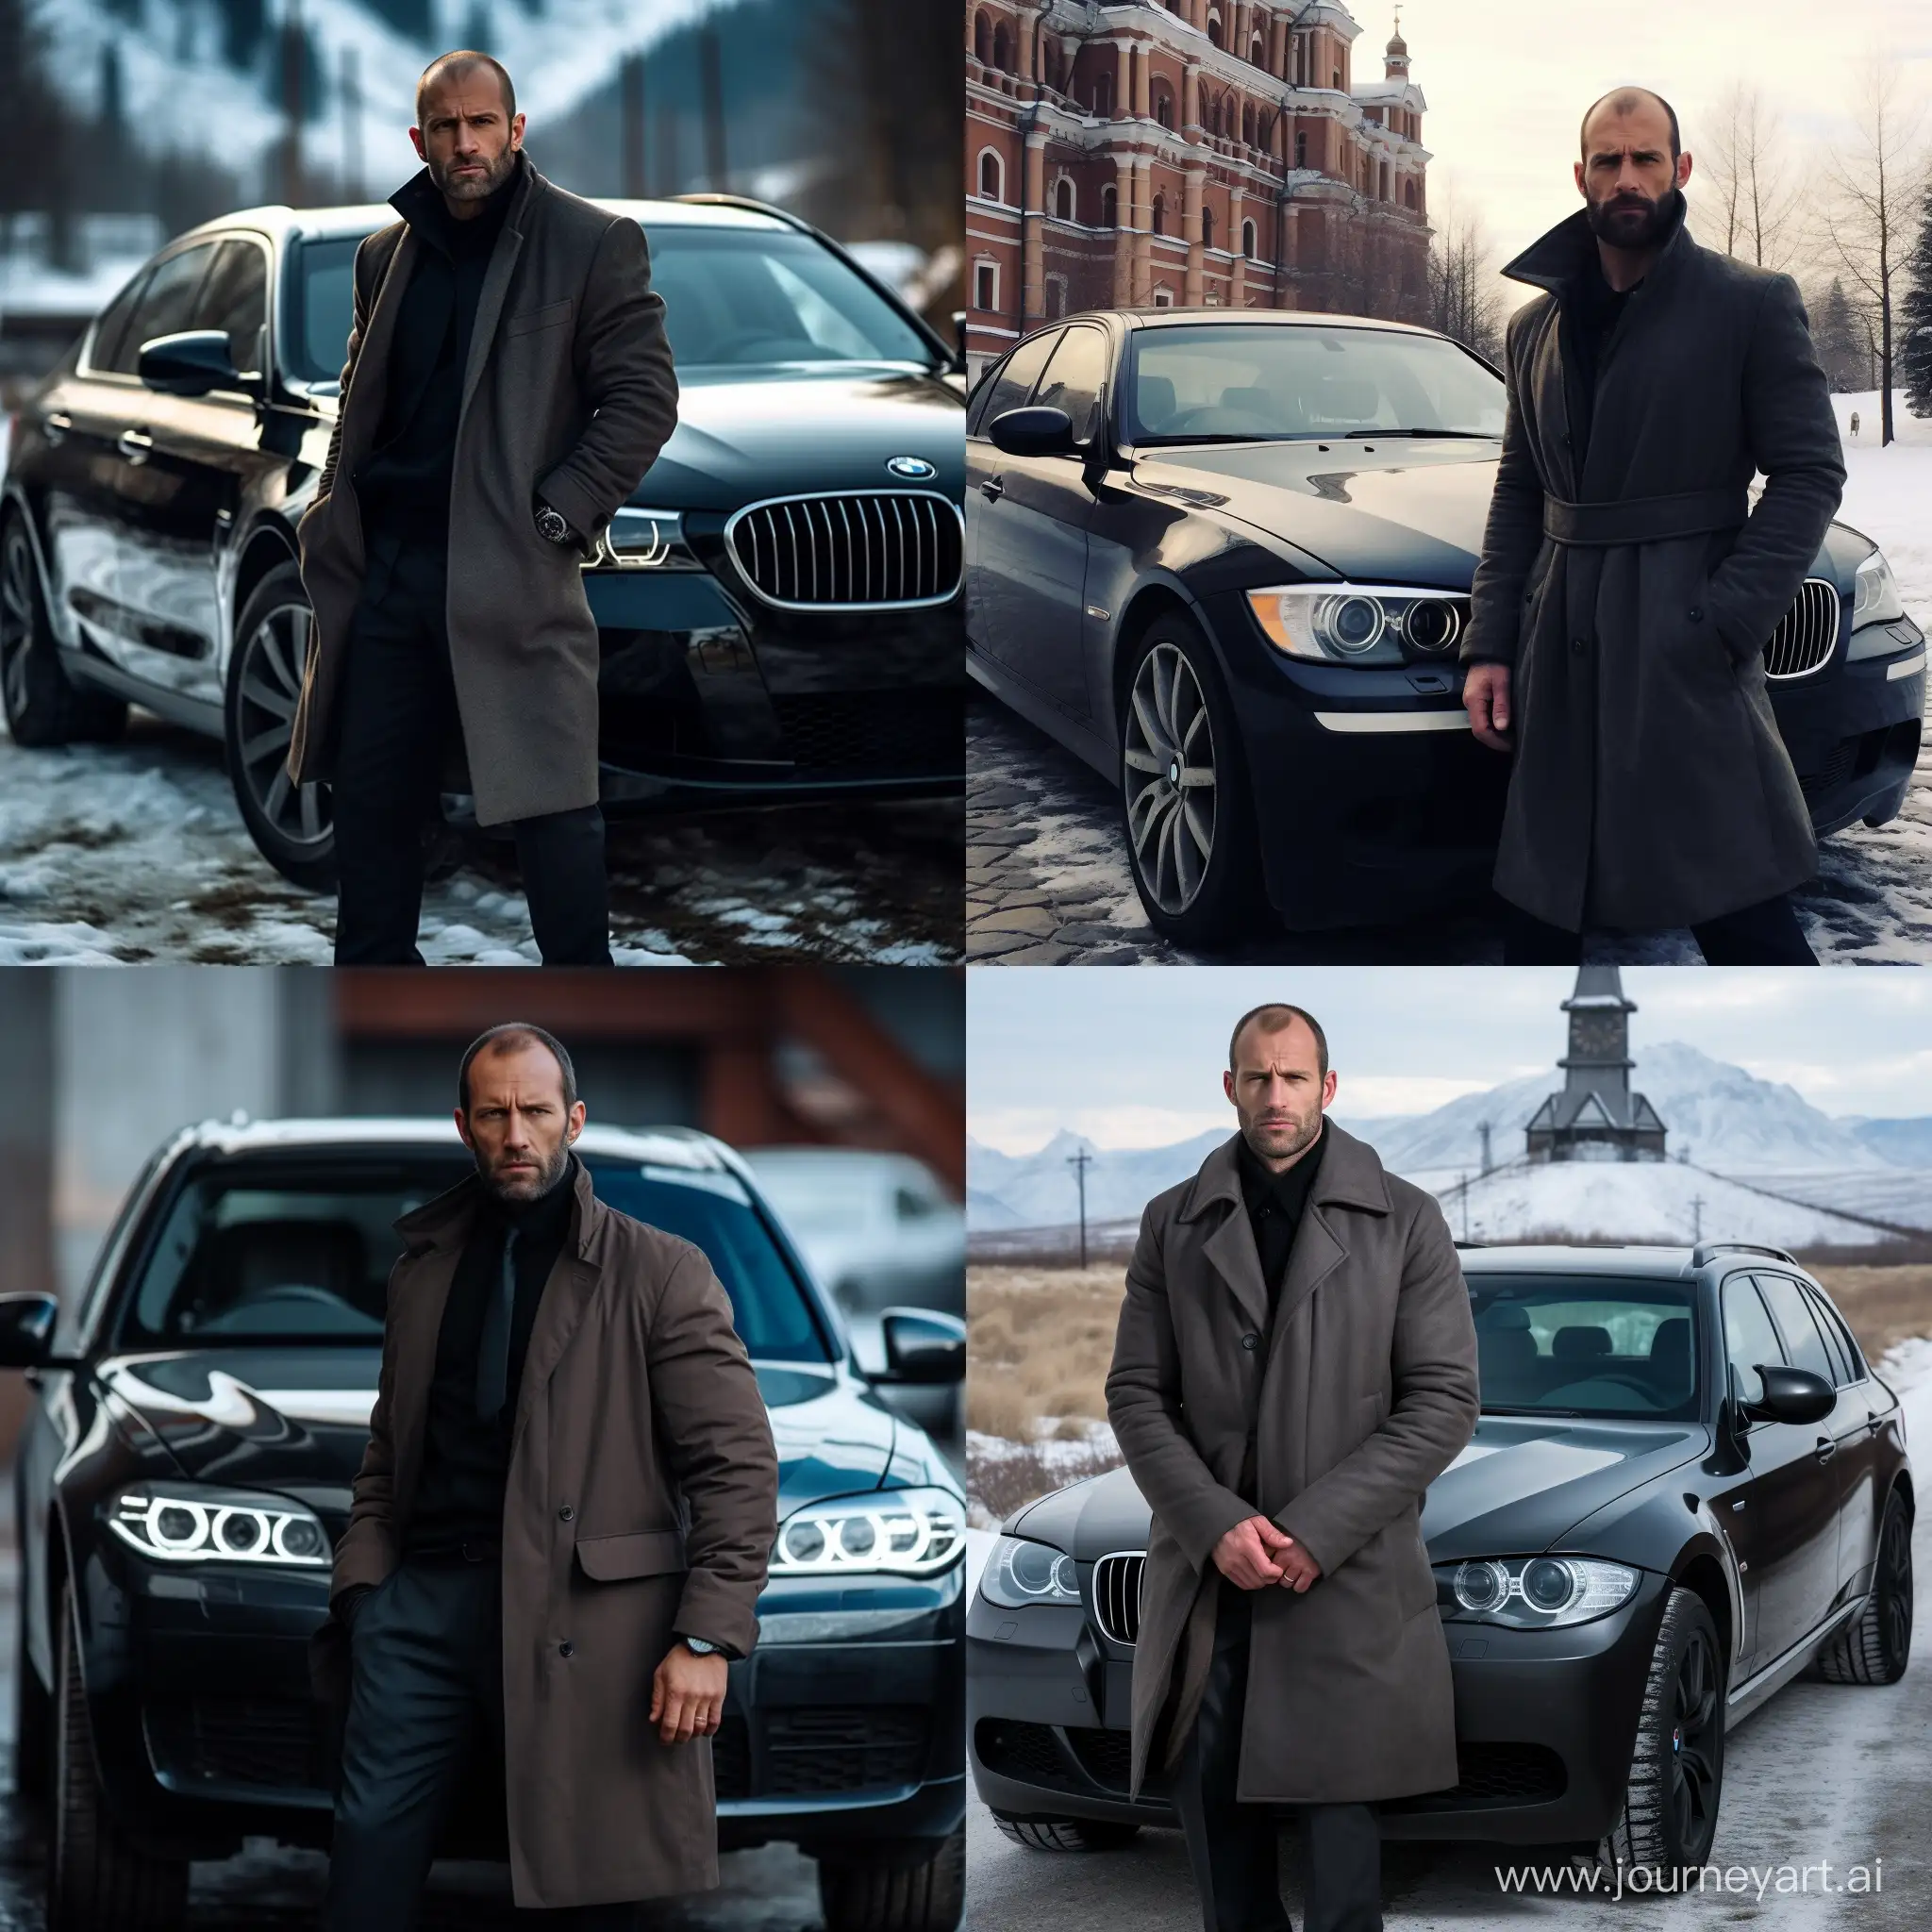 Jason-Statham-Russian-Bandit-Drives-BMW-in-Noir-Style